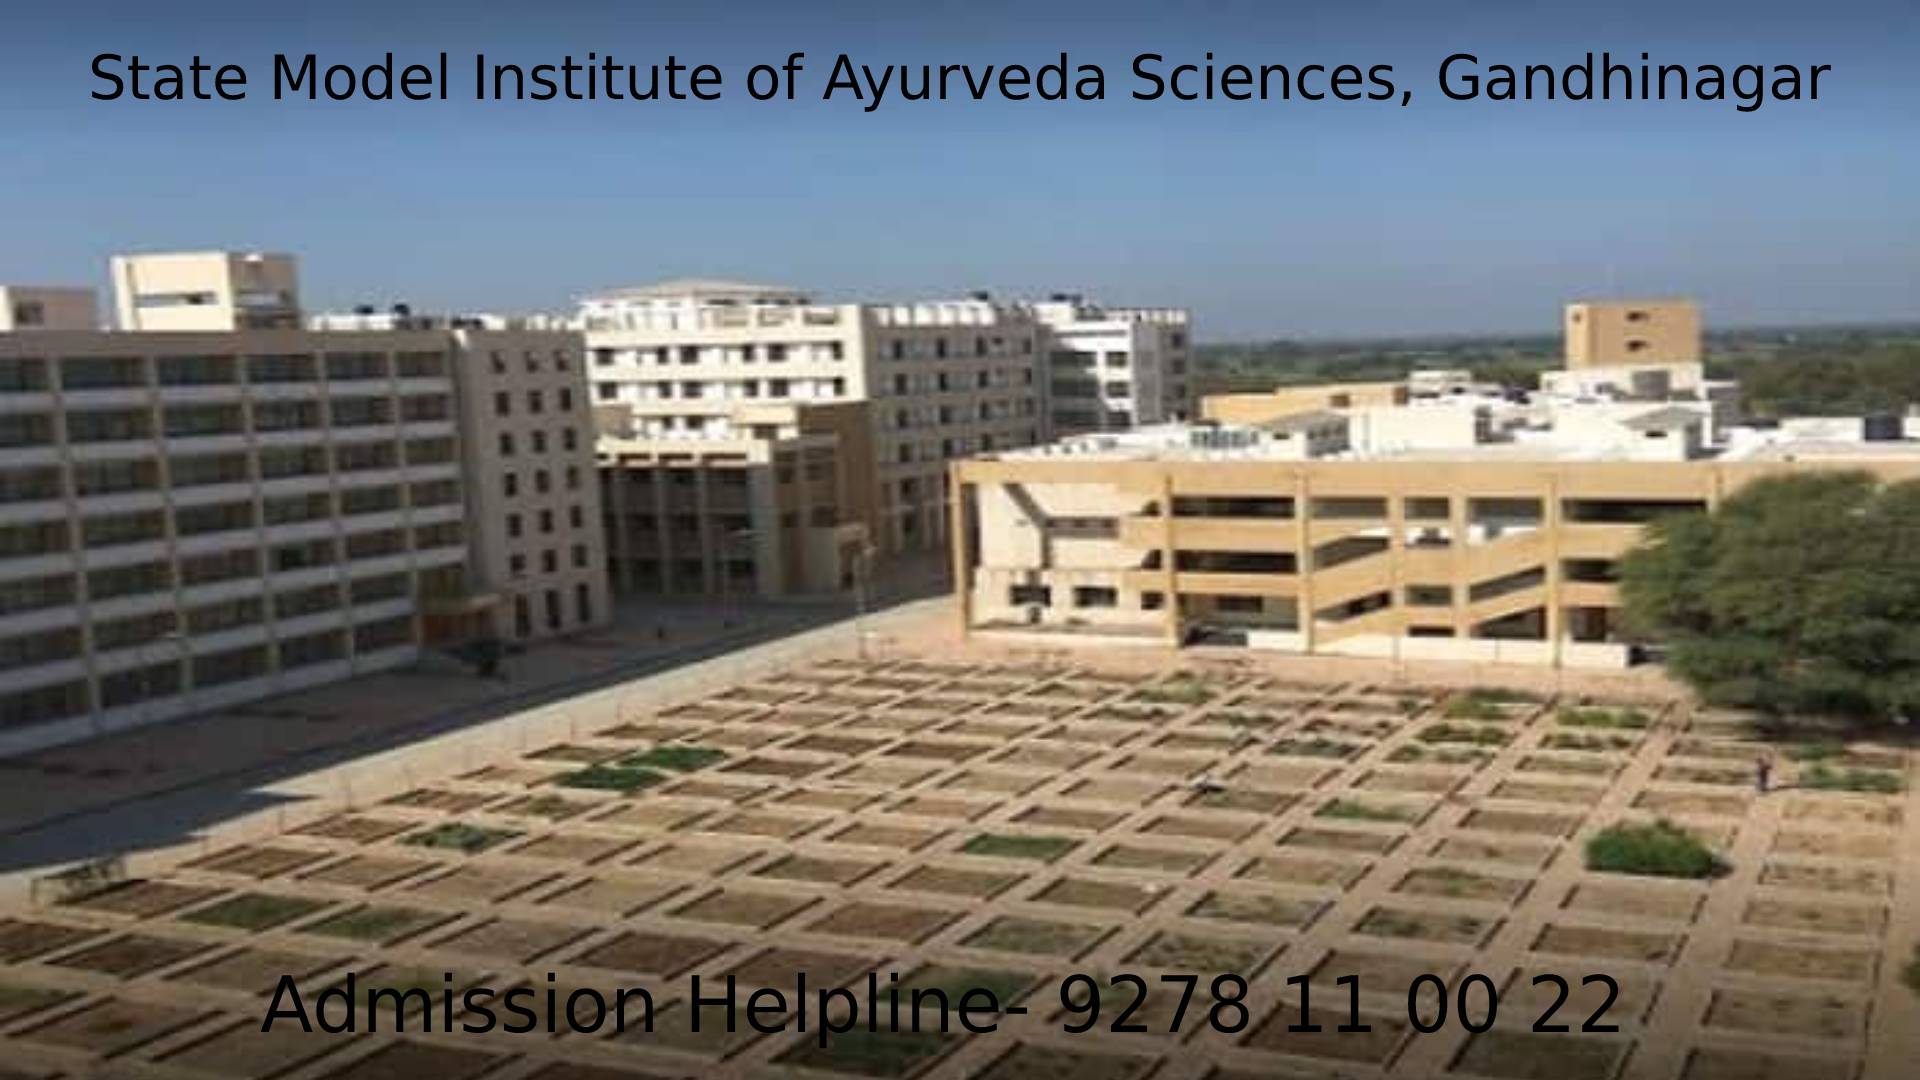 State Model Institute of Ayurveda Sciences, Gandhinagar